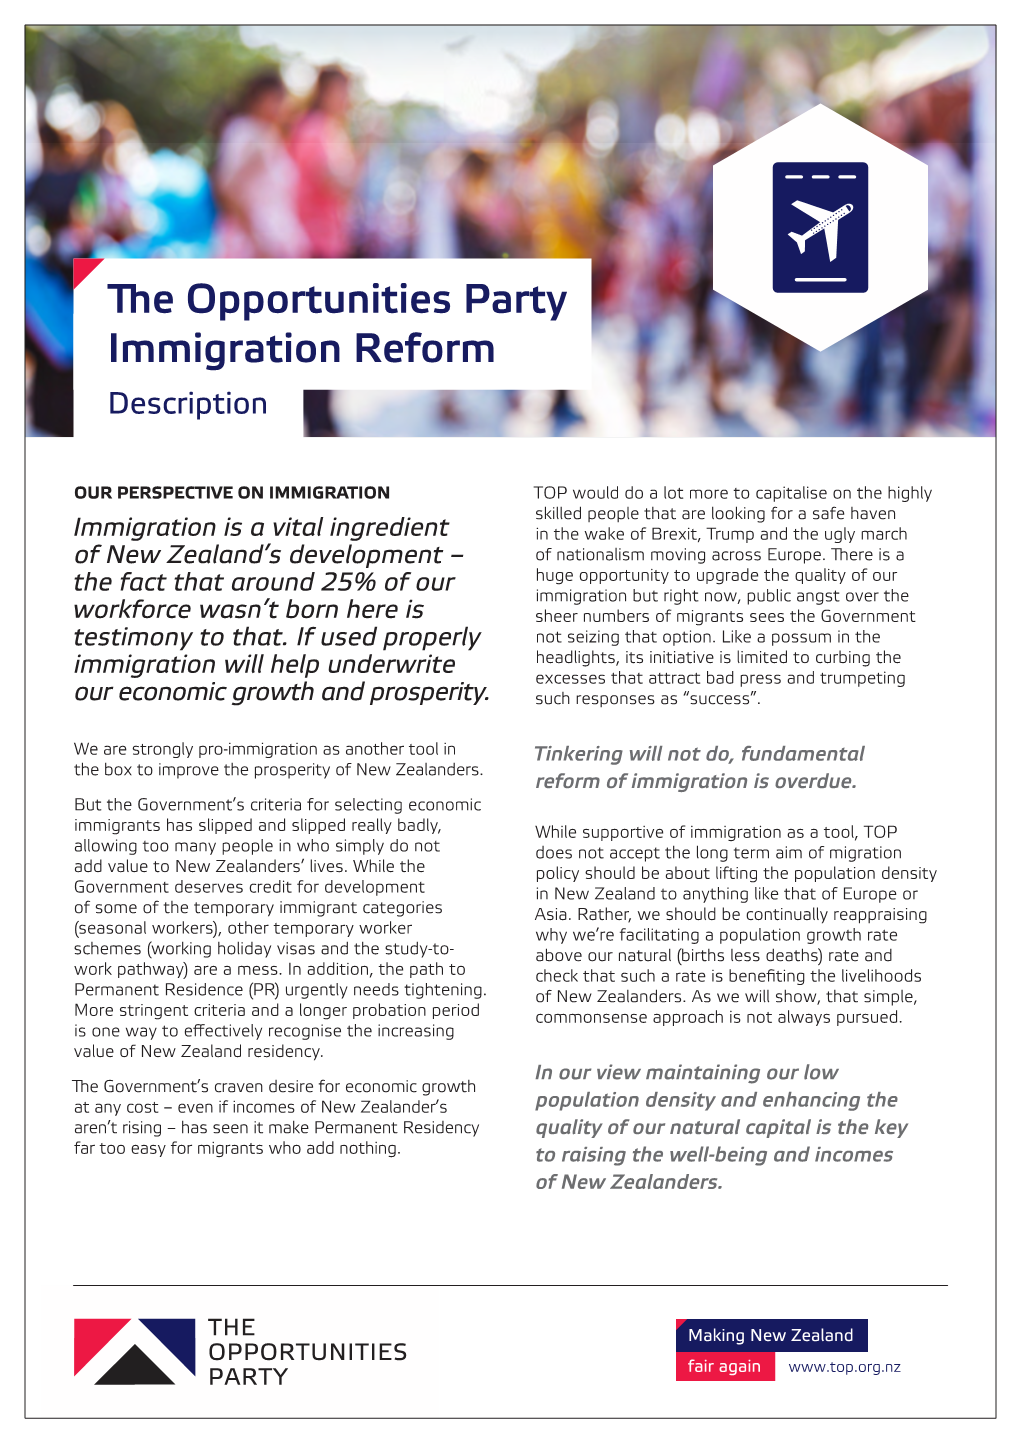 The Opportunities Party Immigration Reform Description